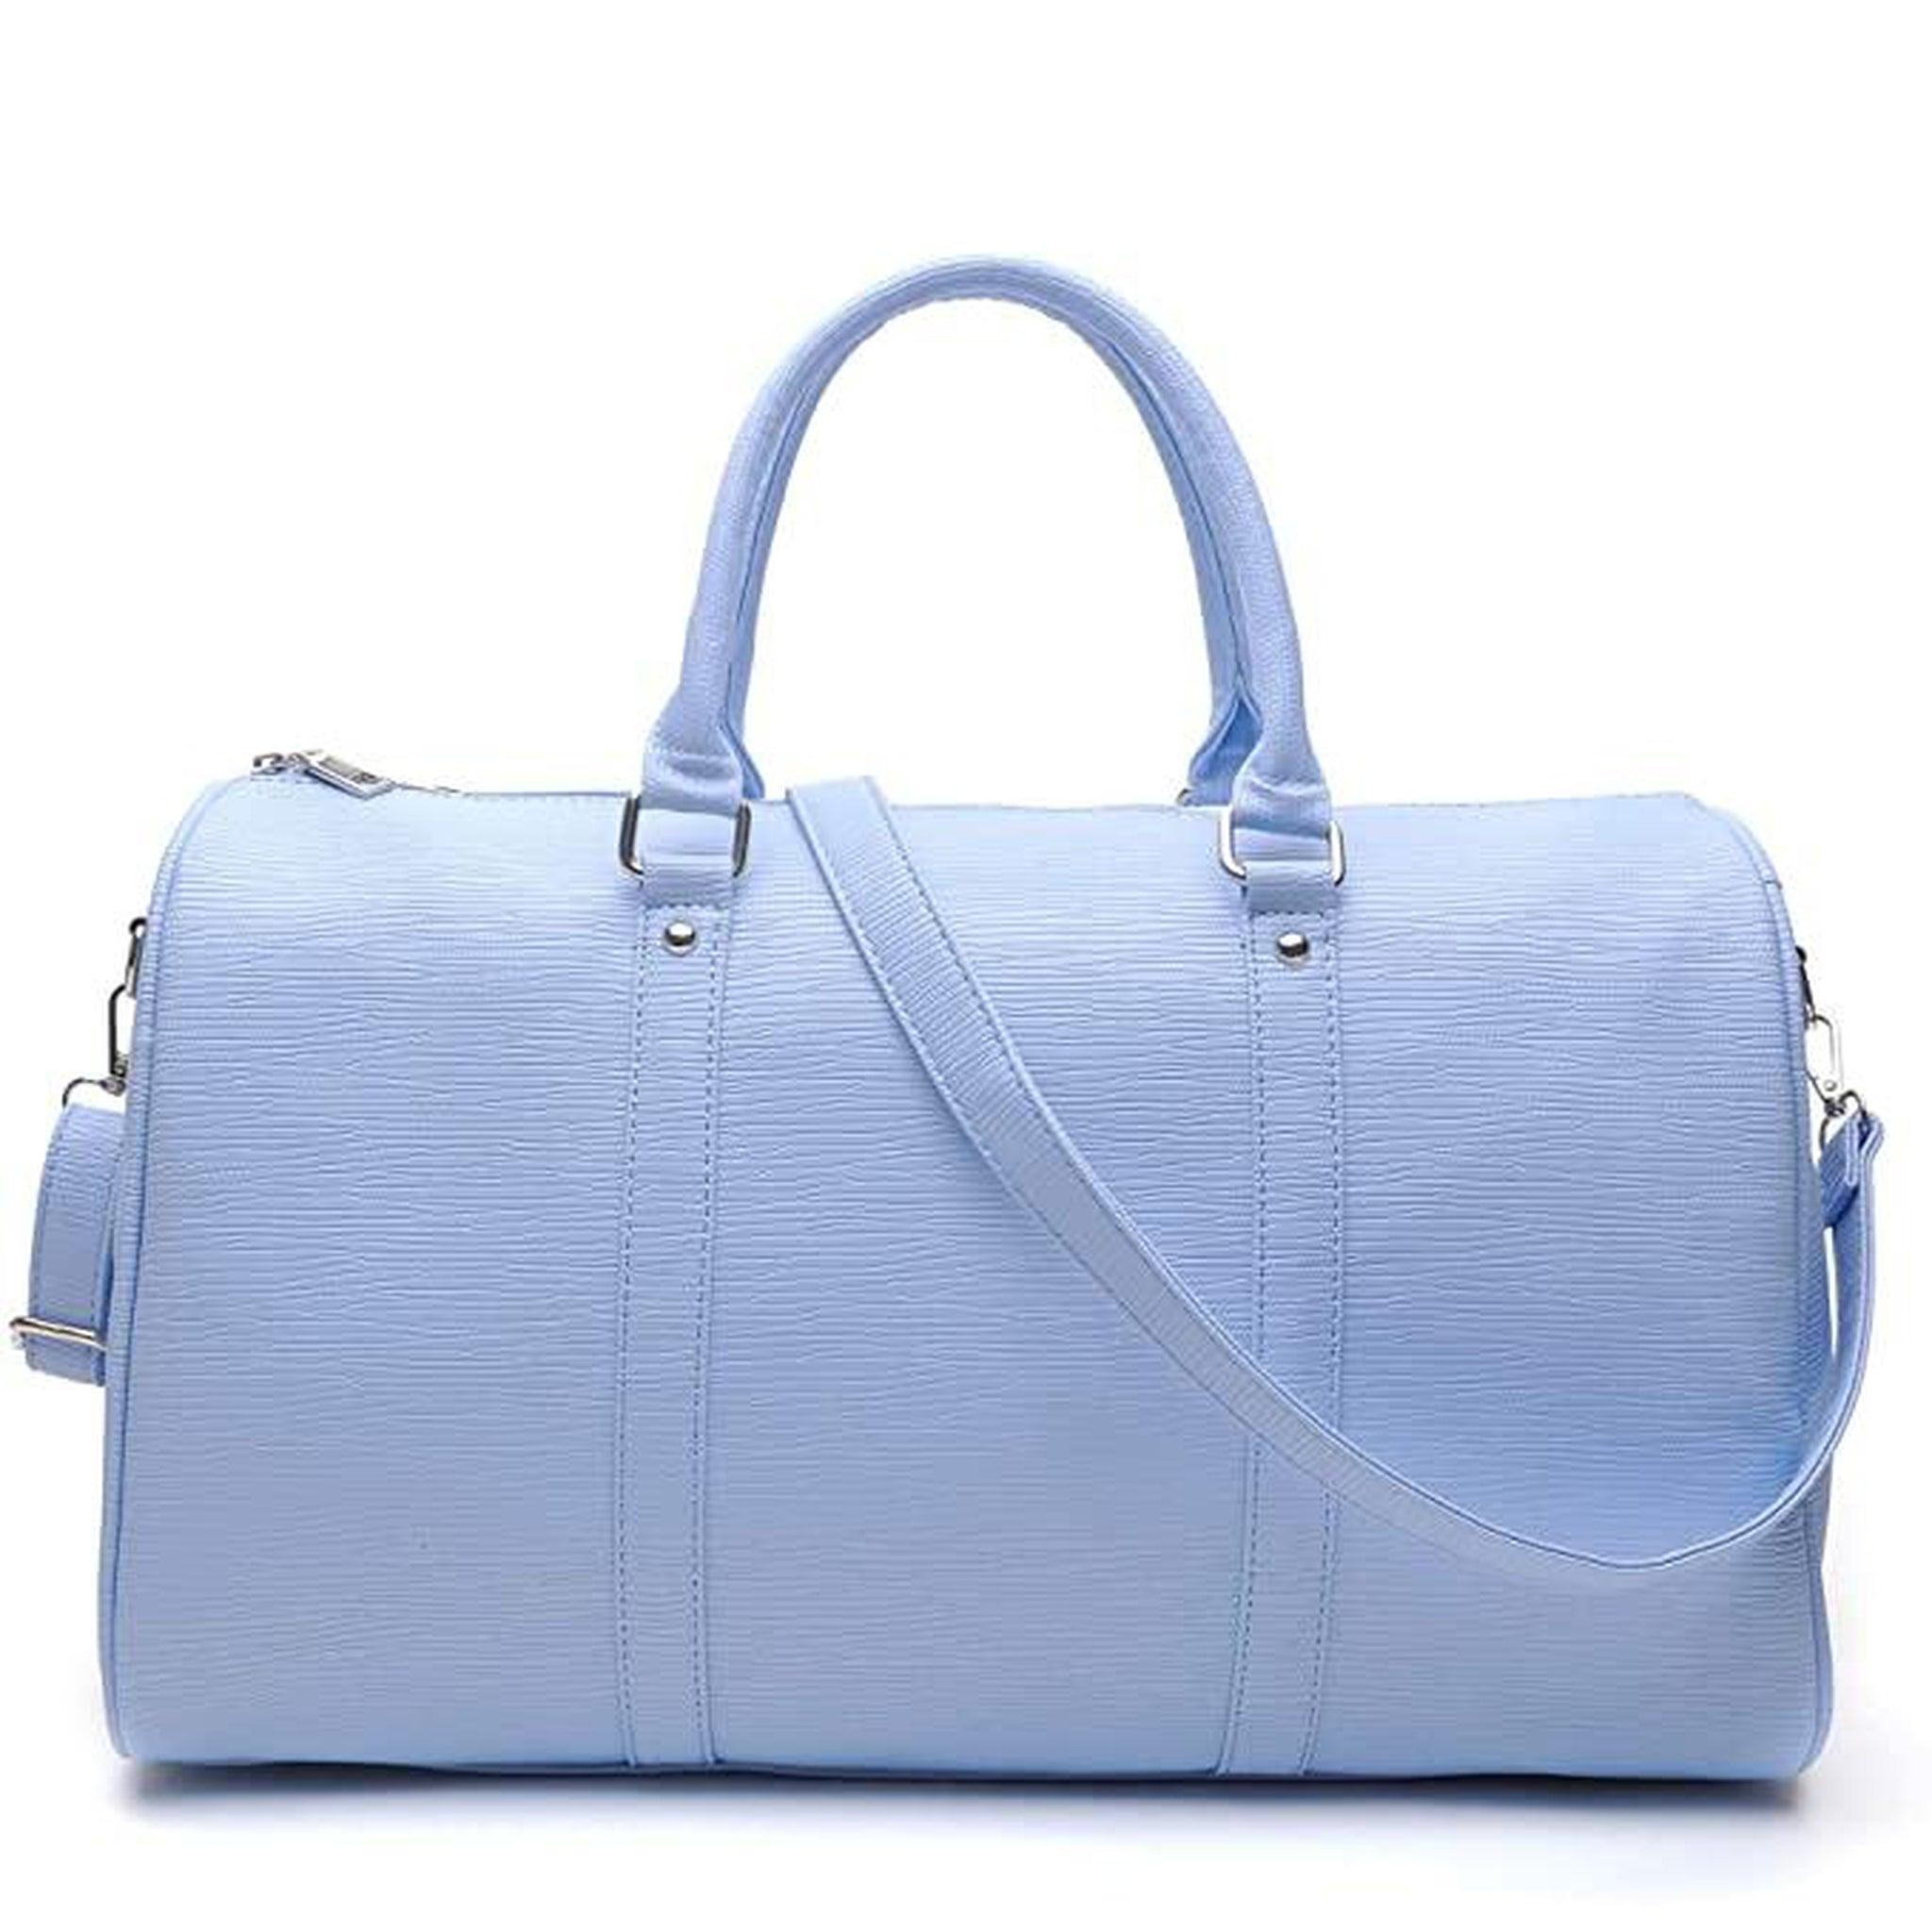 High-Quality Leather Duffle Bag - FR Fashion Co.